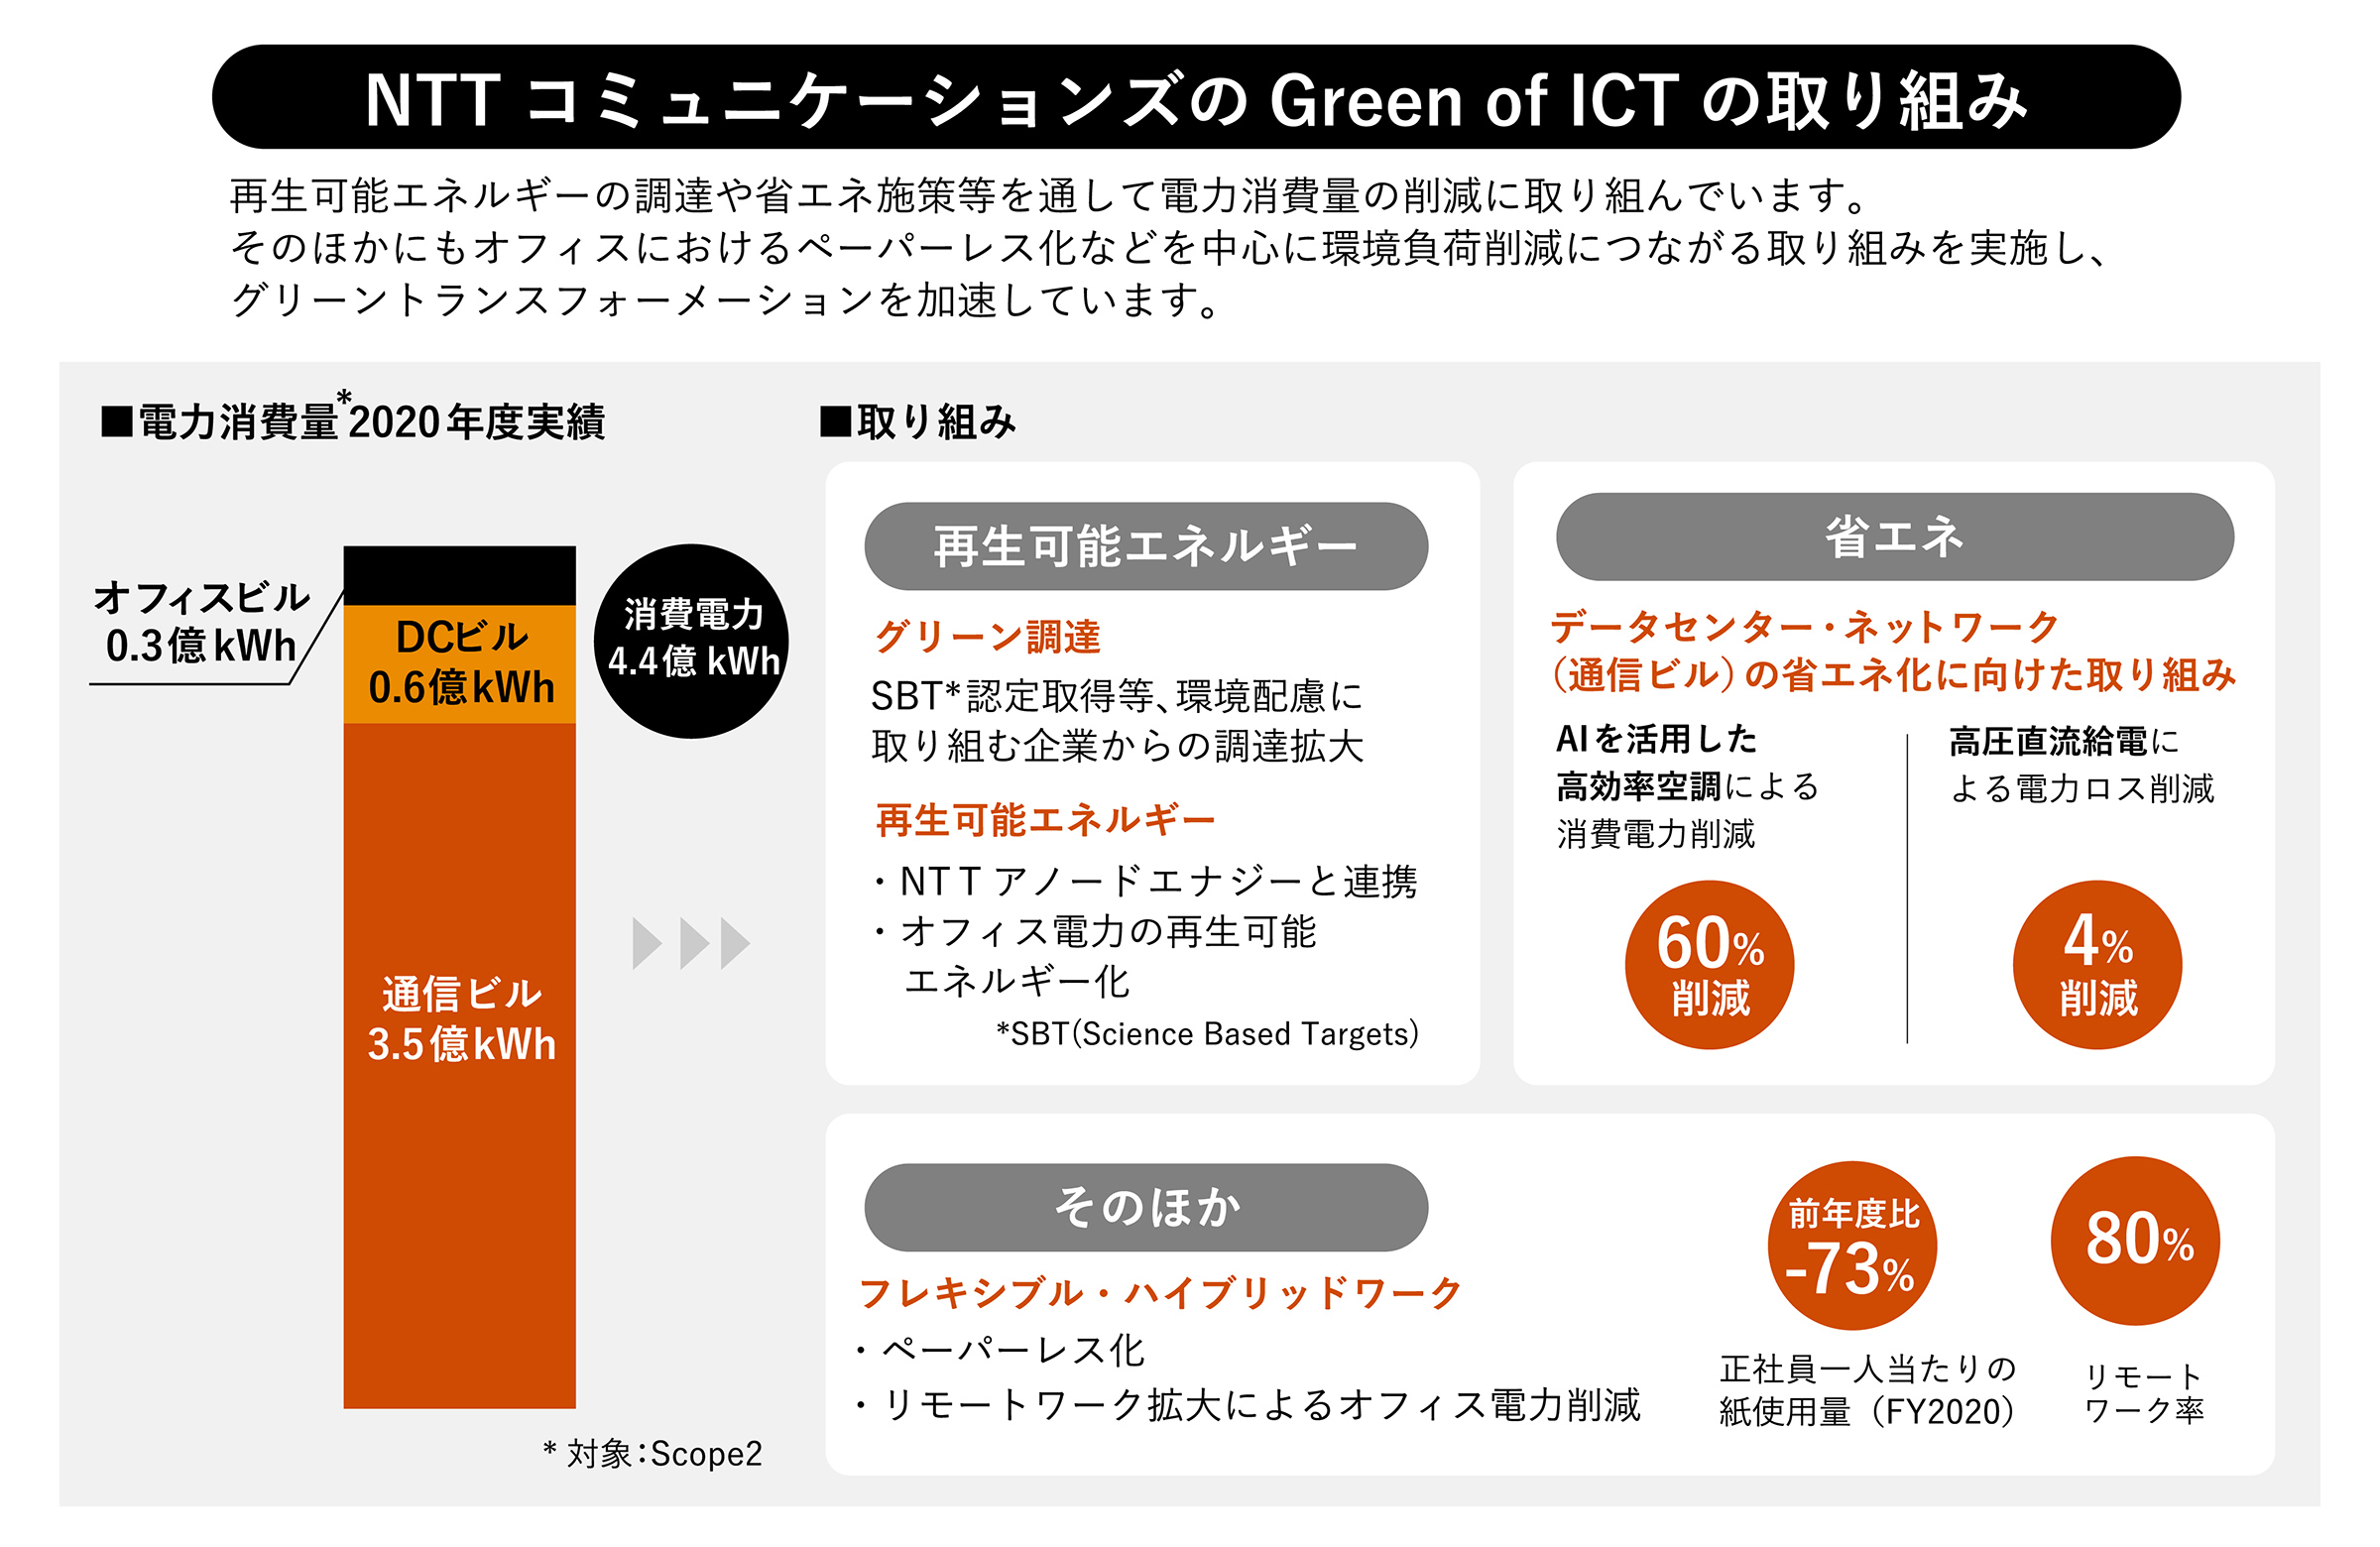 NTTコミュニケーションズの「Green of ICT」